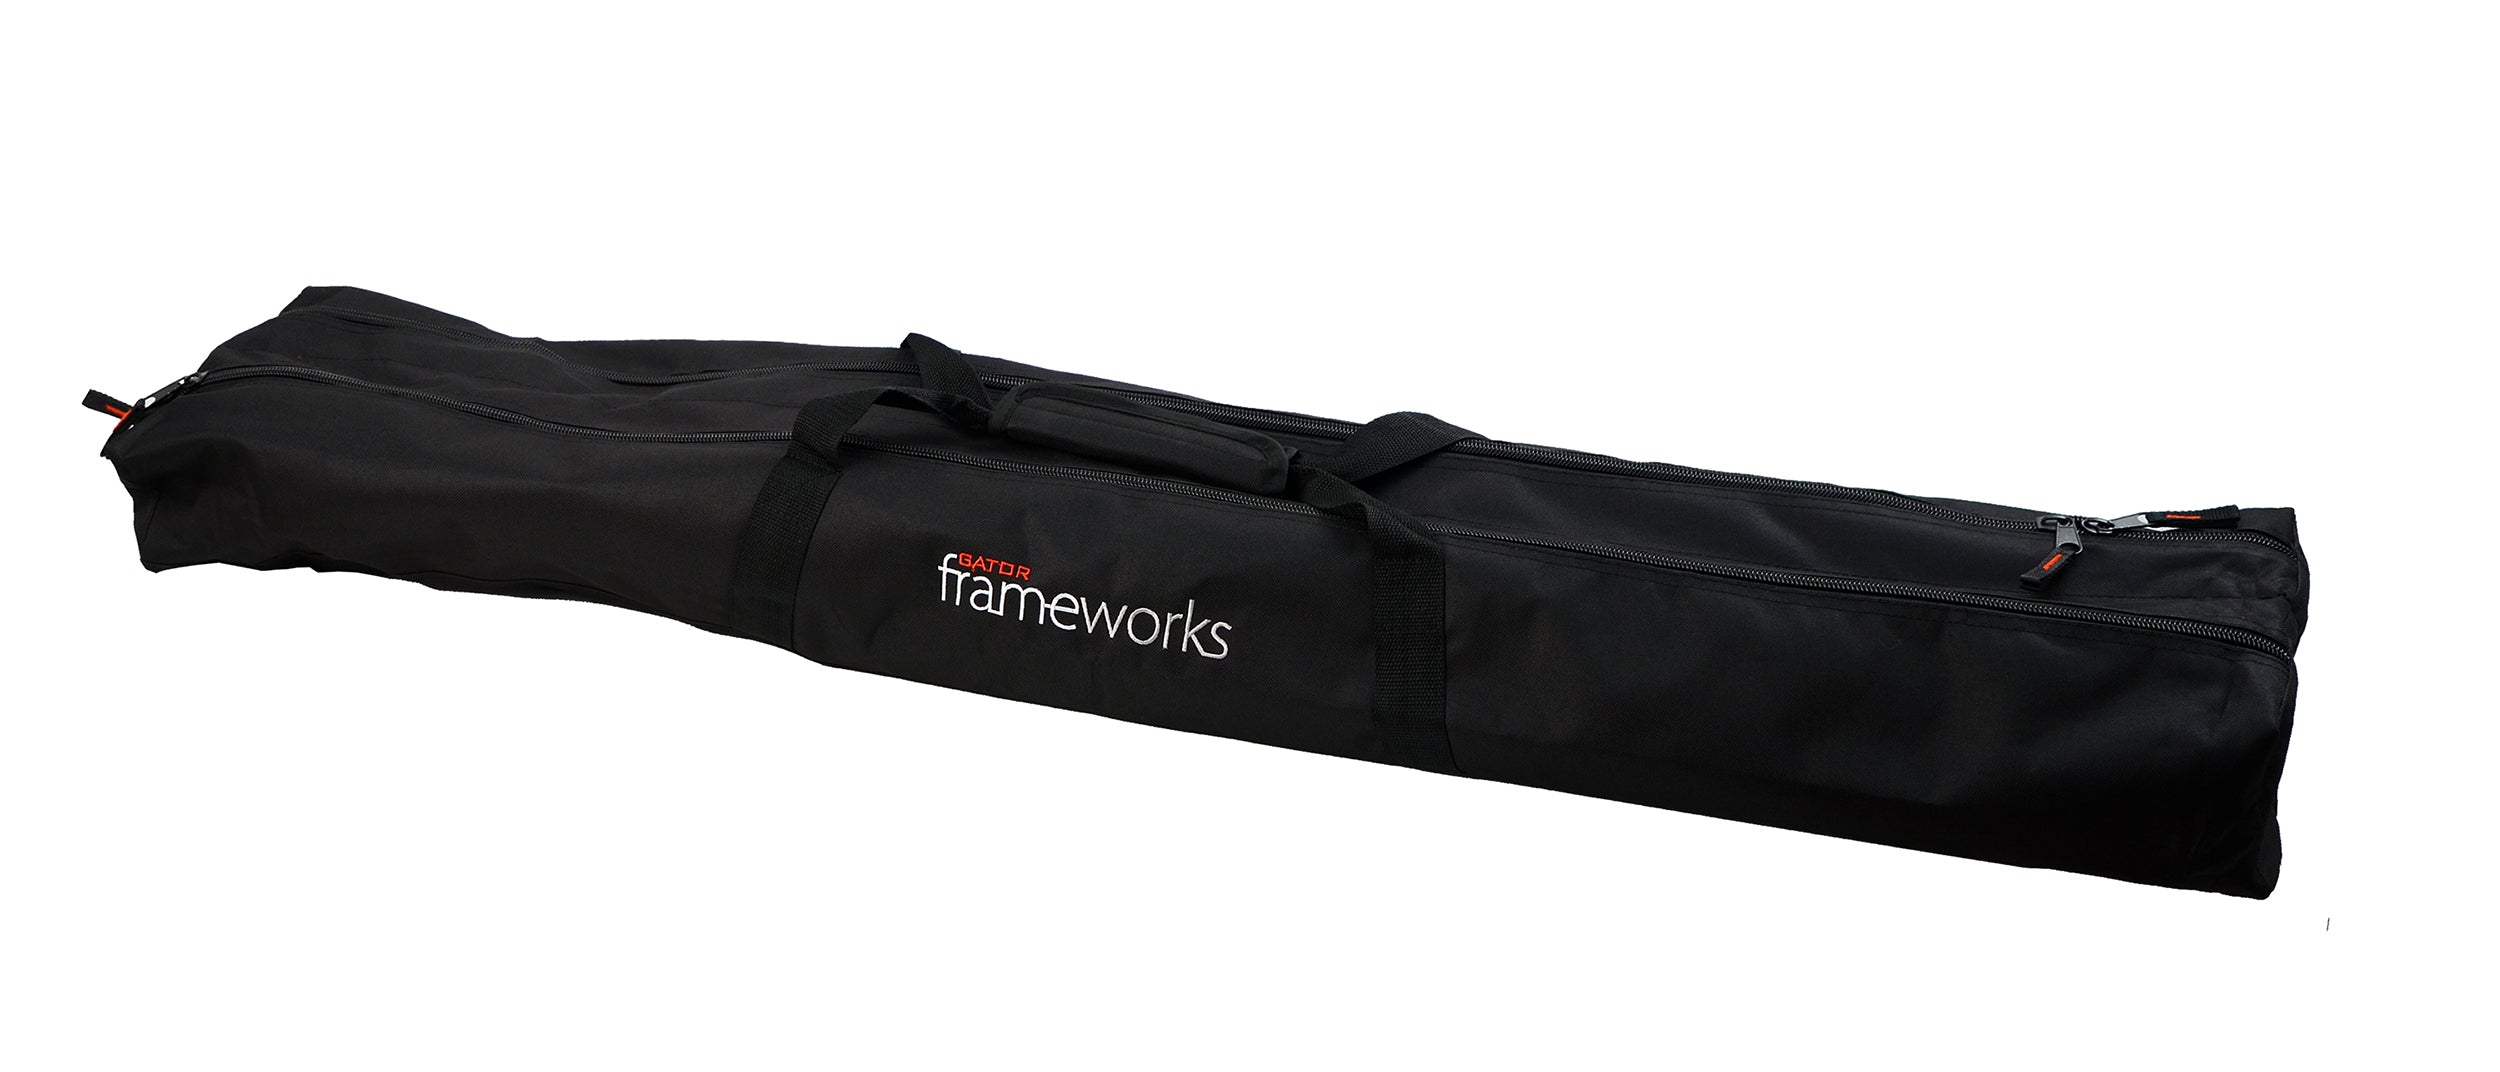 Gator Frameworks | GFW-SPK-3000 (pair) with Carry Bag